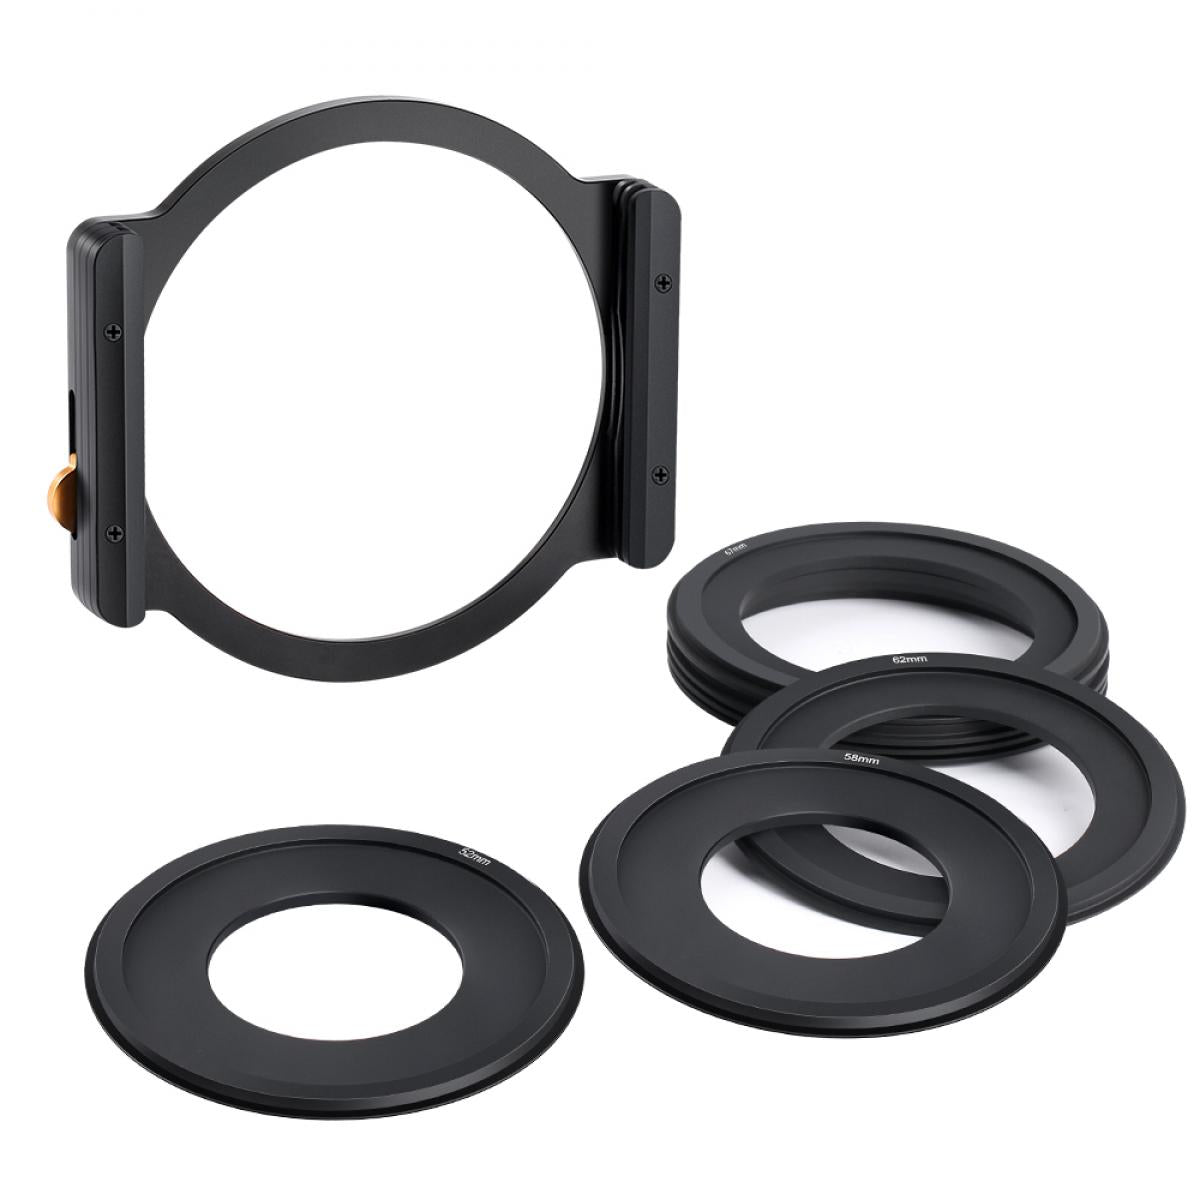 K&F Concept KF16-006 Metal Square Filter Holder with 8pcs Adapter Ring for DSLR Cameras